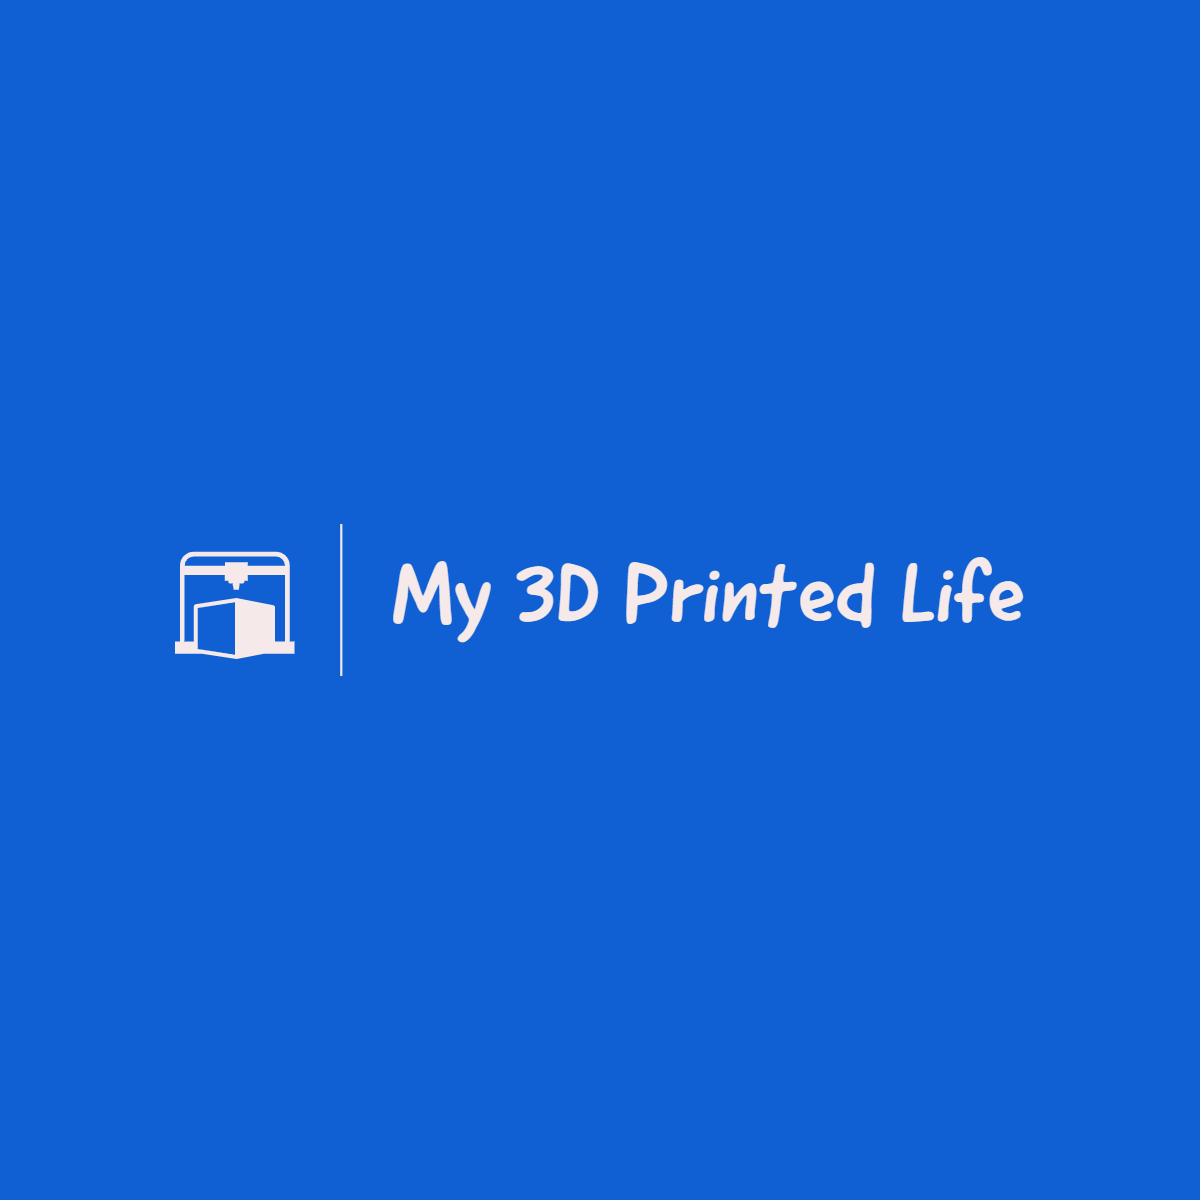 My 3D Printed Life